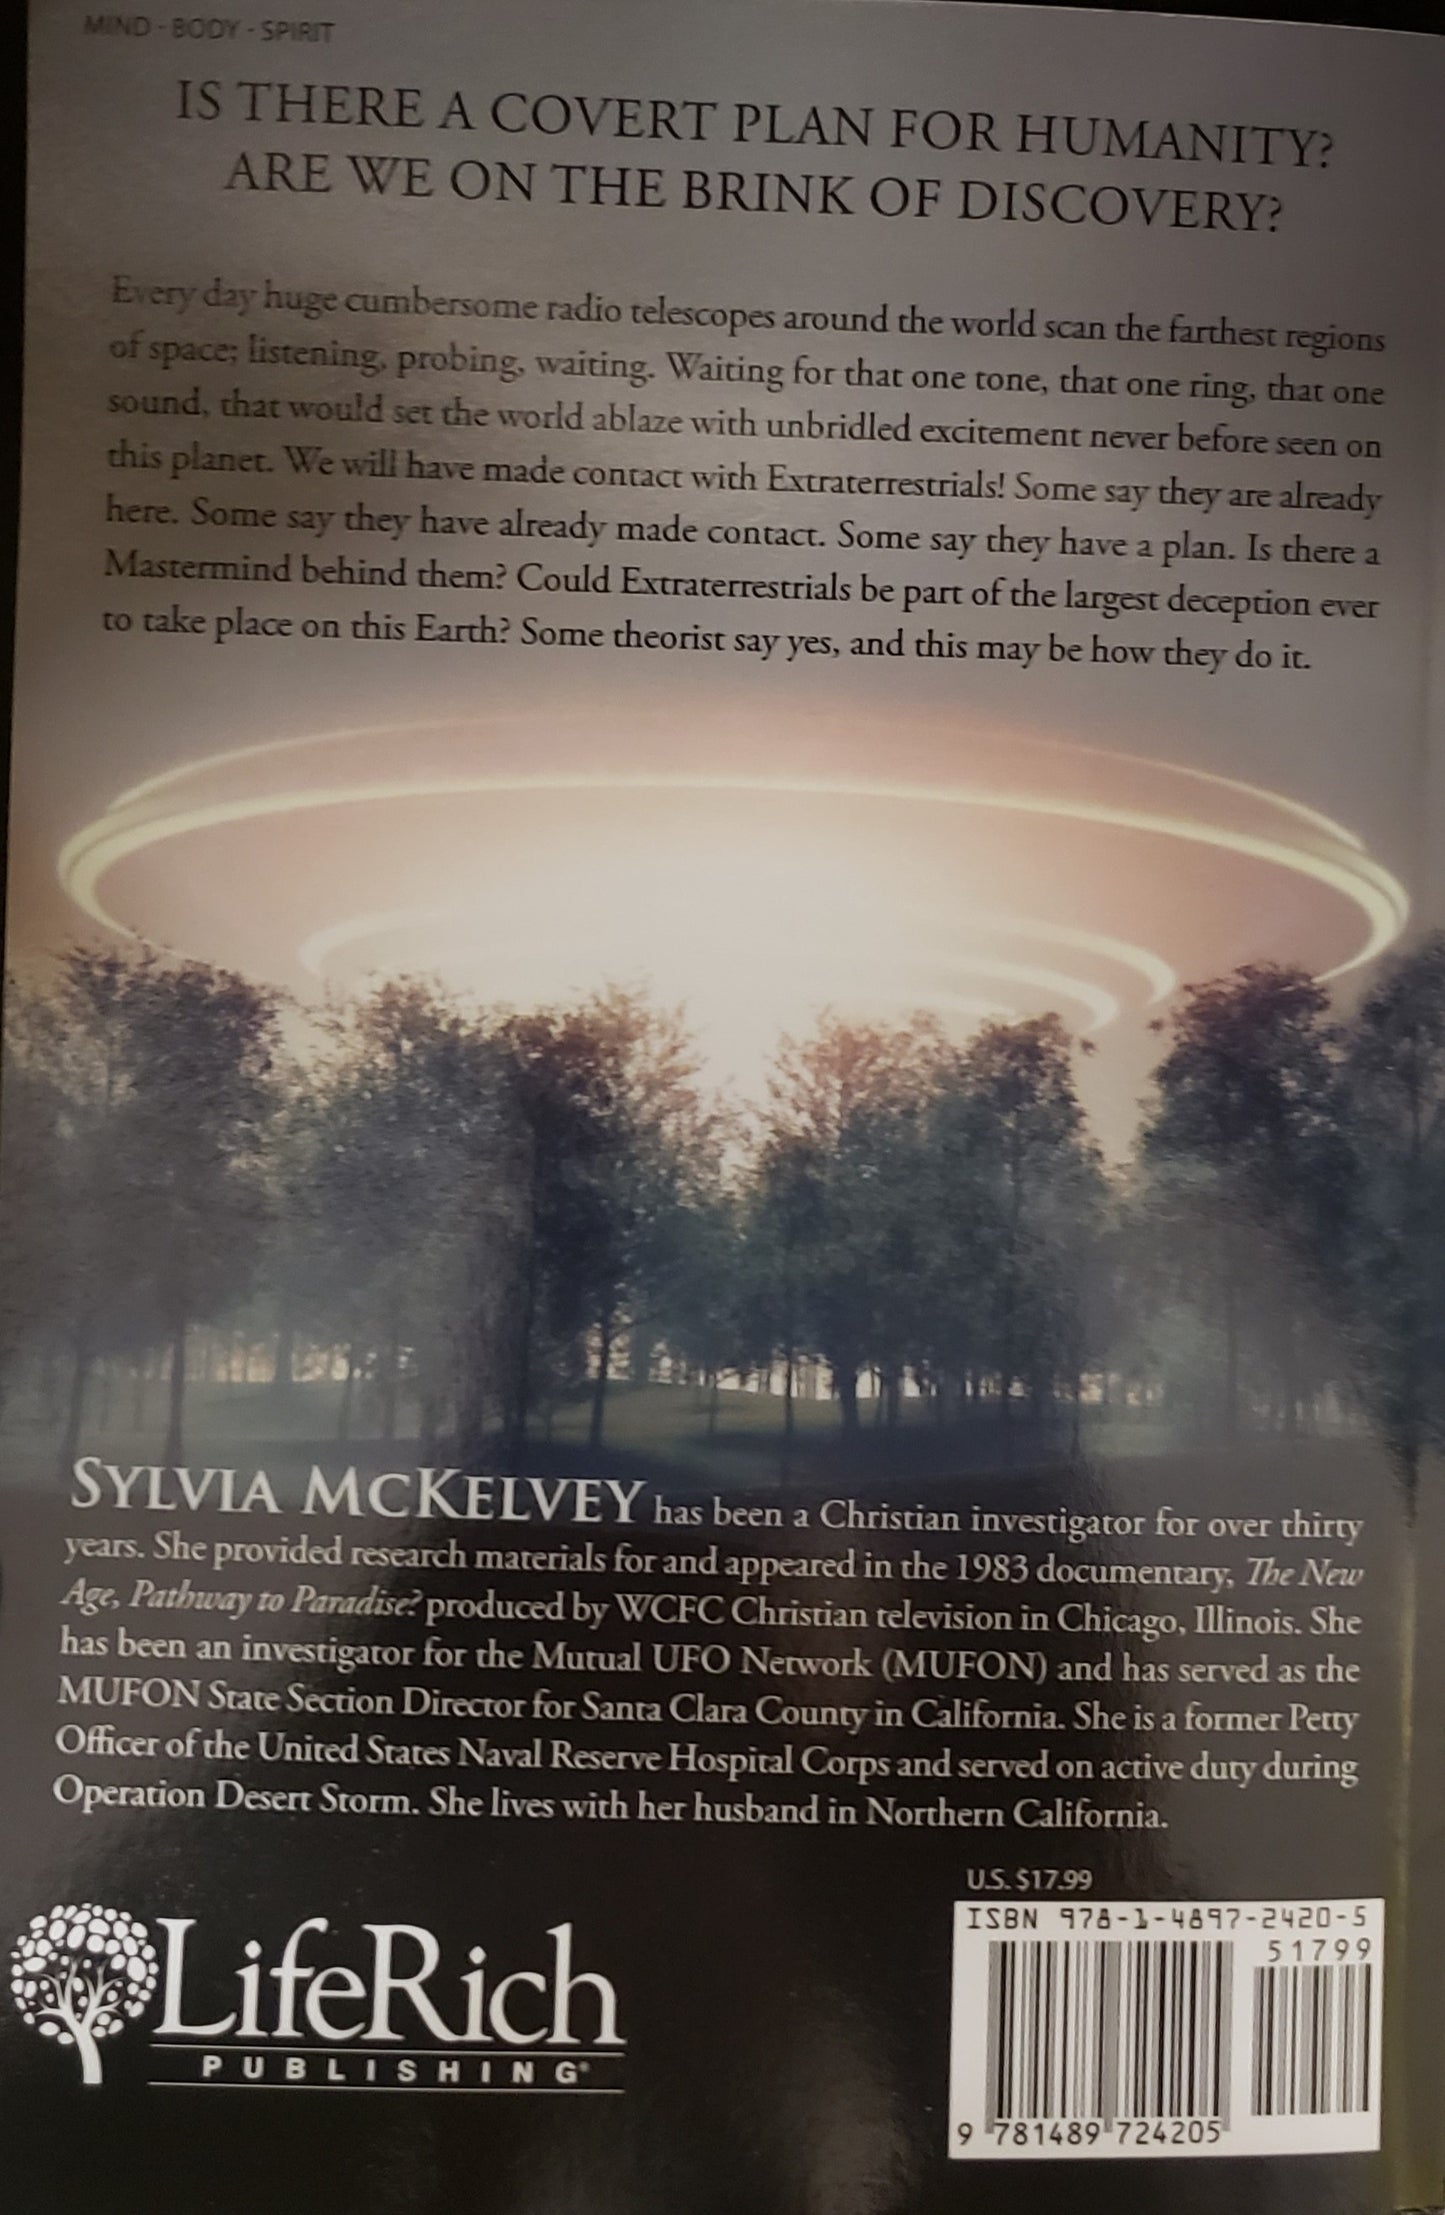 Storm on the Horizon Nonfiction spiritual UFO book